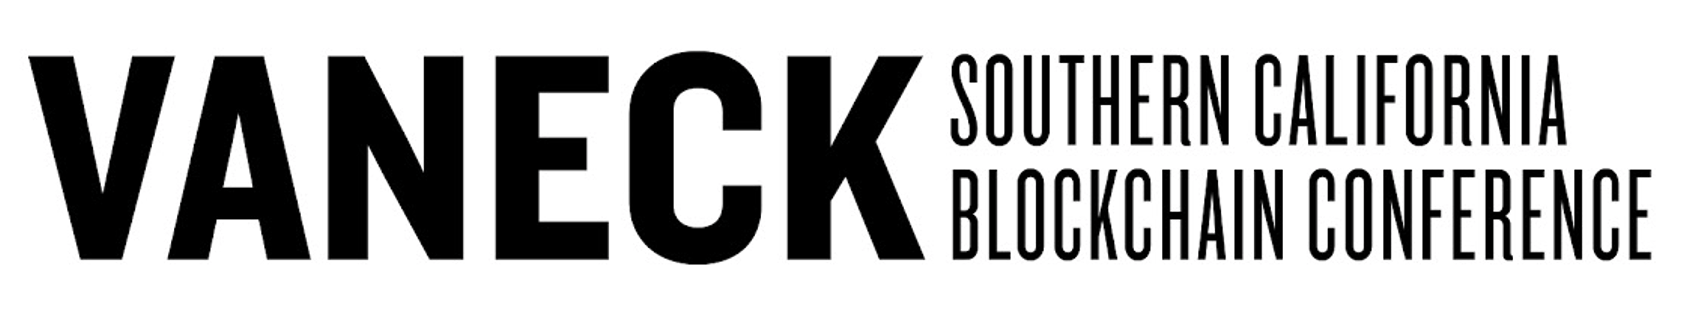 VanEck Southern California Blockchain Conference